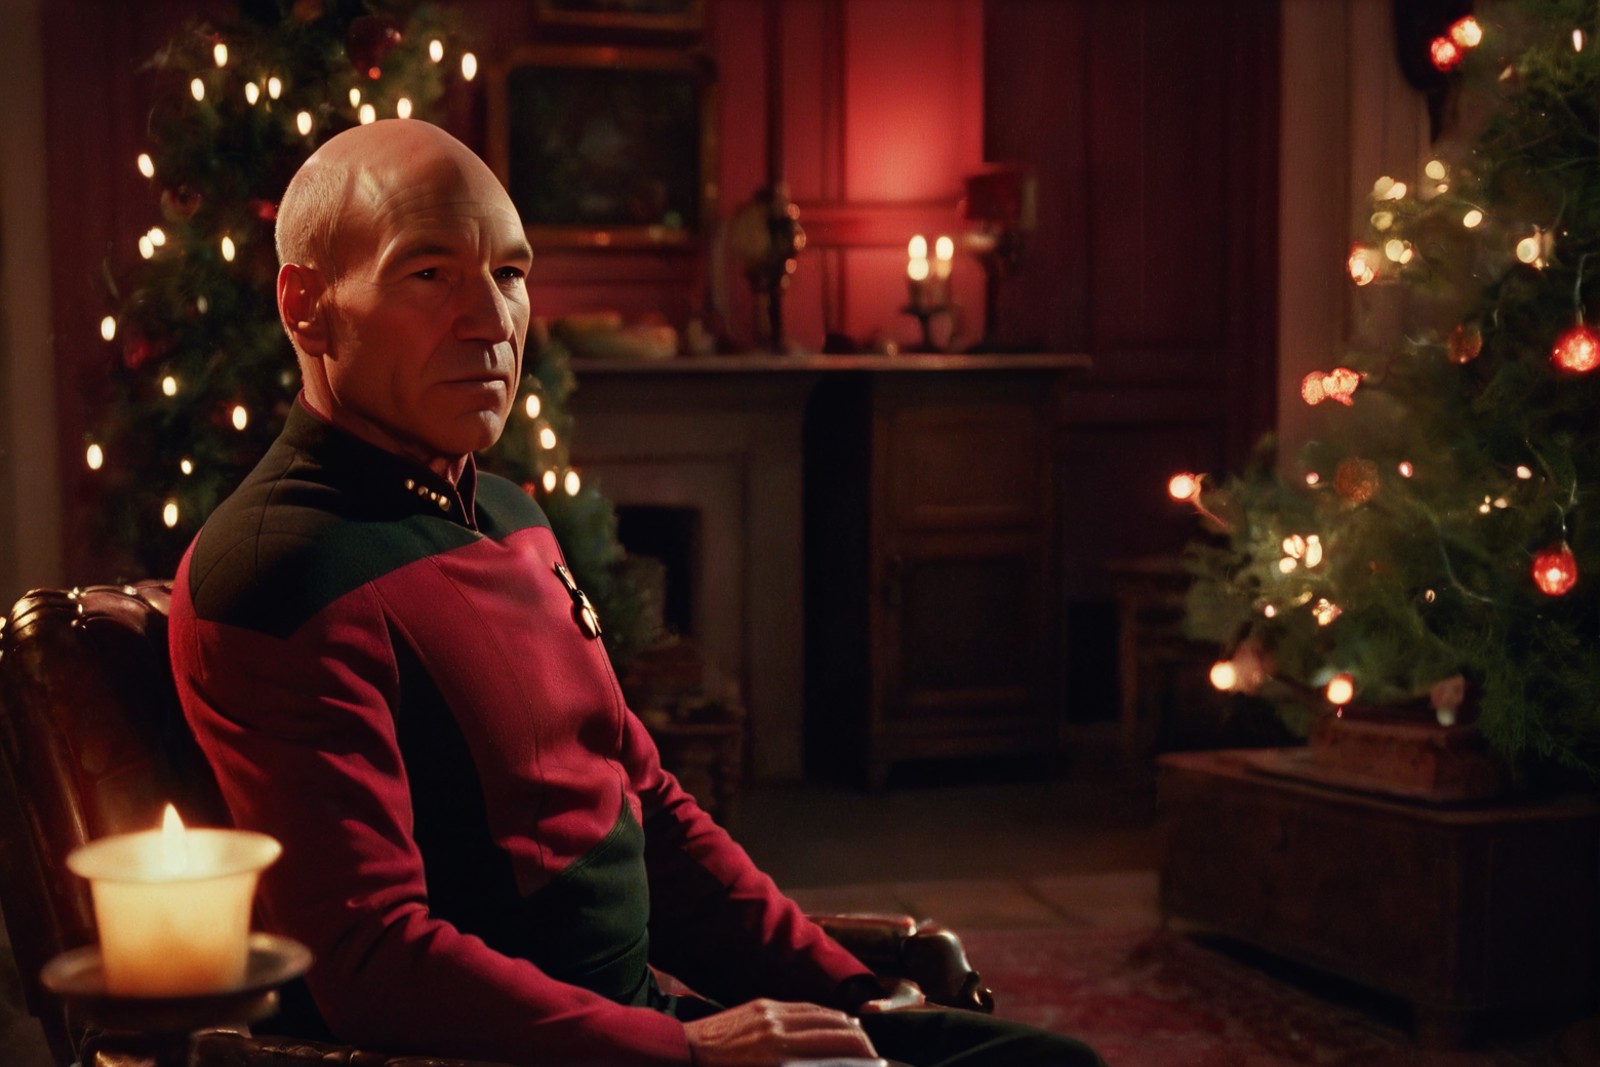 picard wearing a red Starfleet uniform, dark, 19th century home, antique furniture, Christmas, tree, lights, warm light, c...